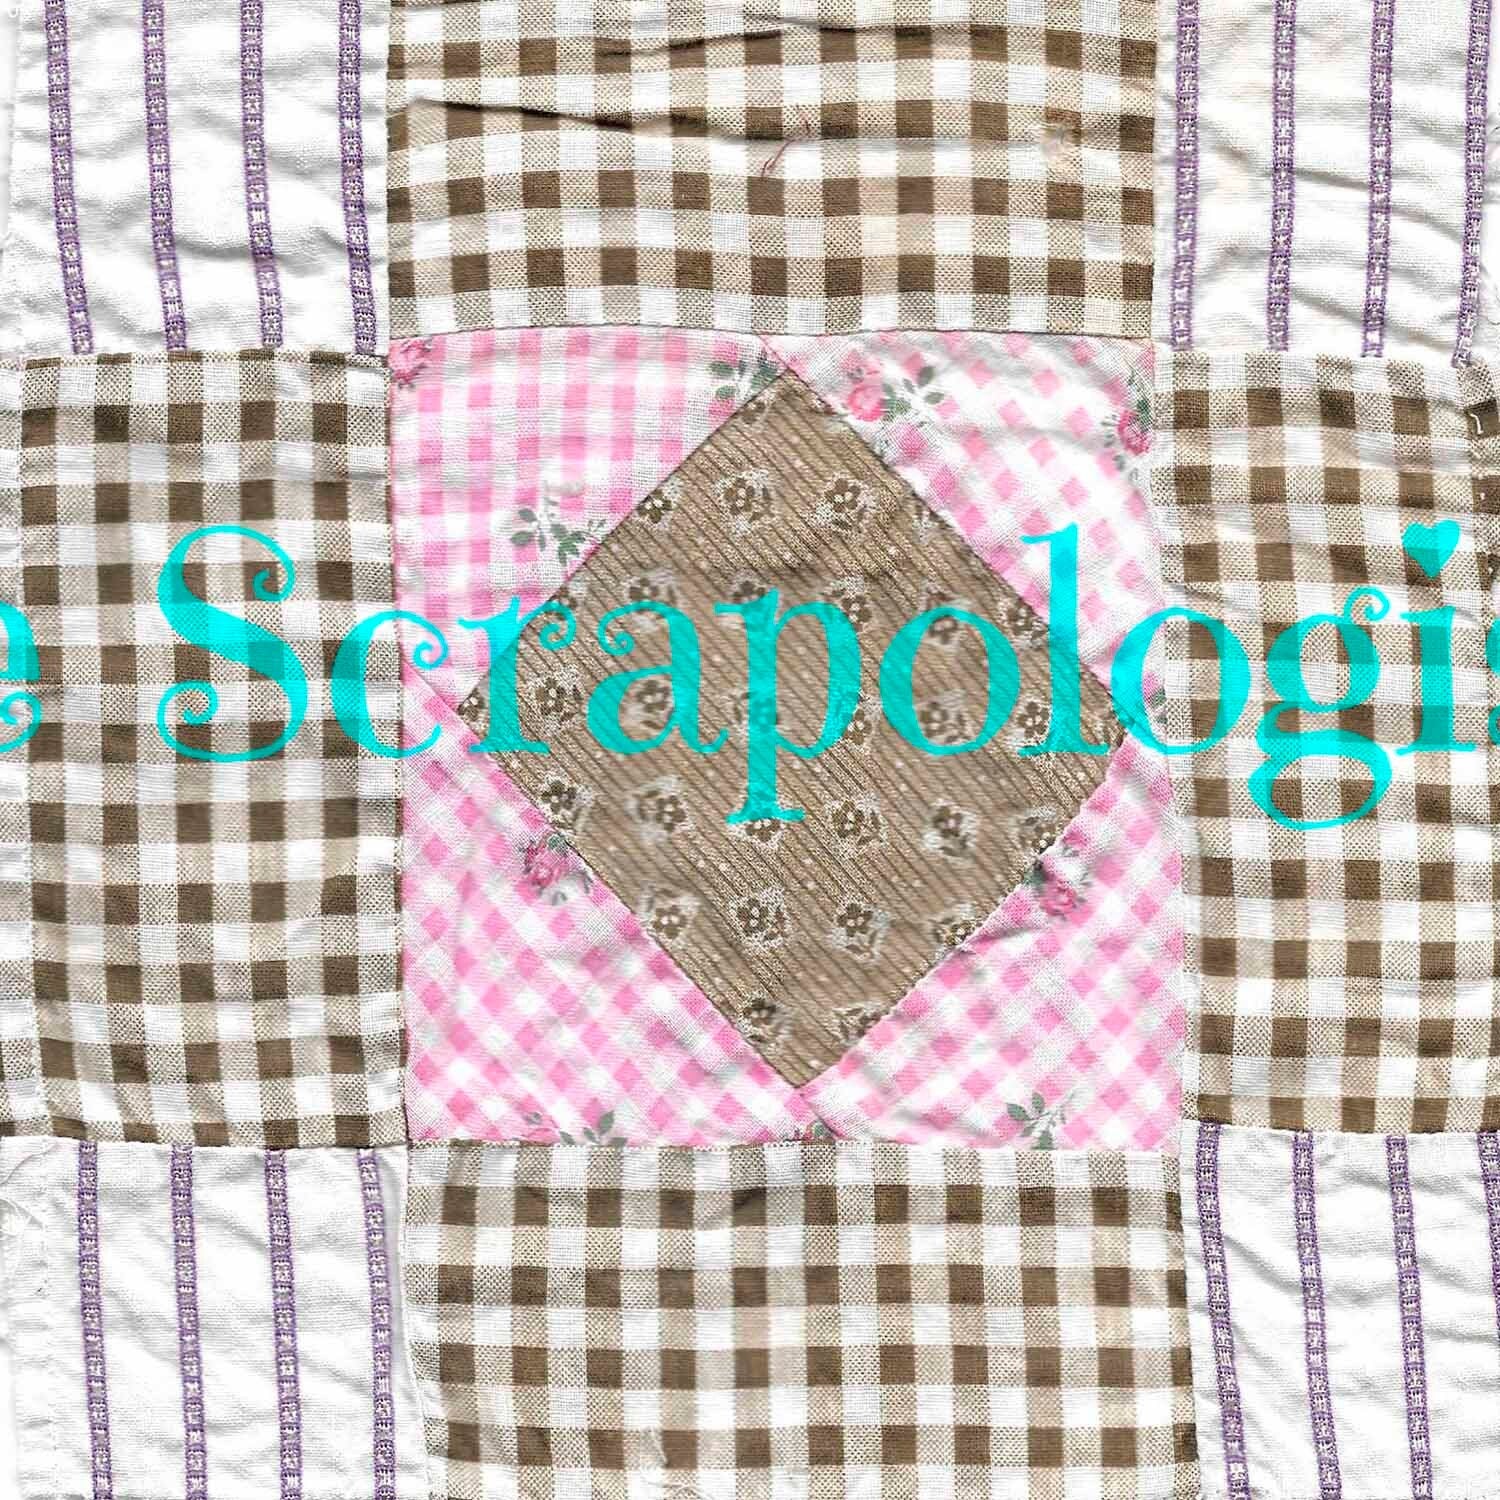 Antique Quilt Block, Vintage Textiles, Junk Journaling Kit, Collage Pages | Digital Download